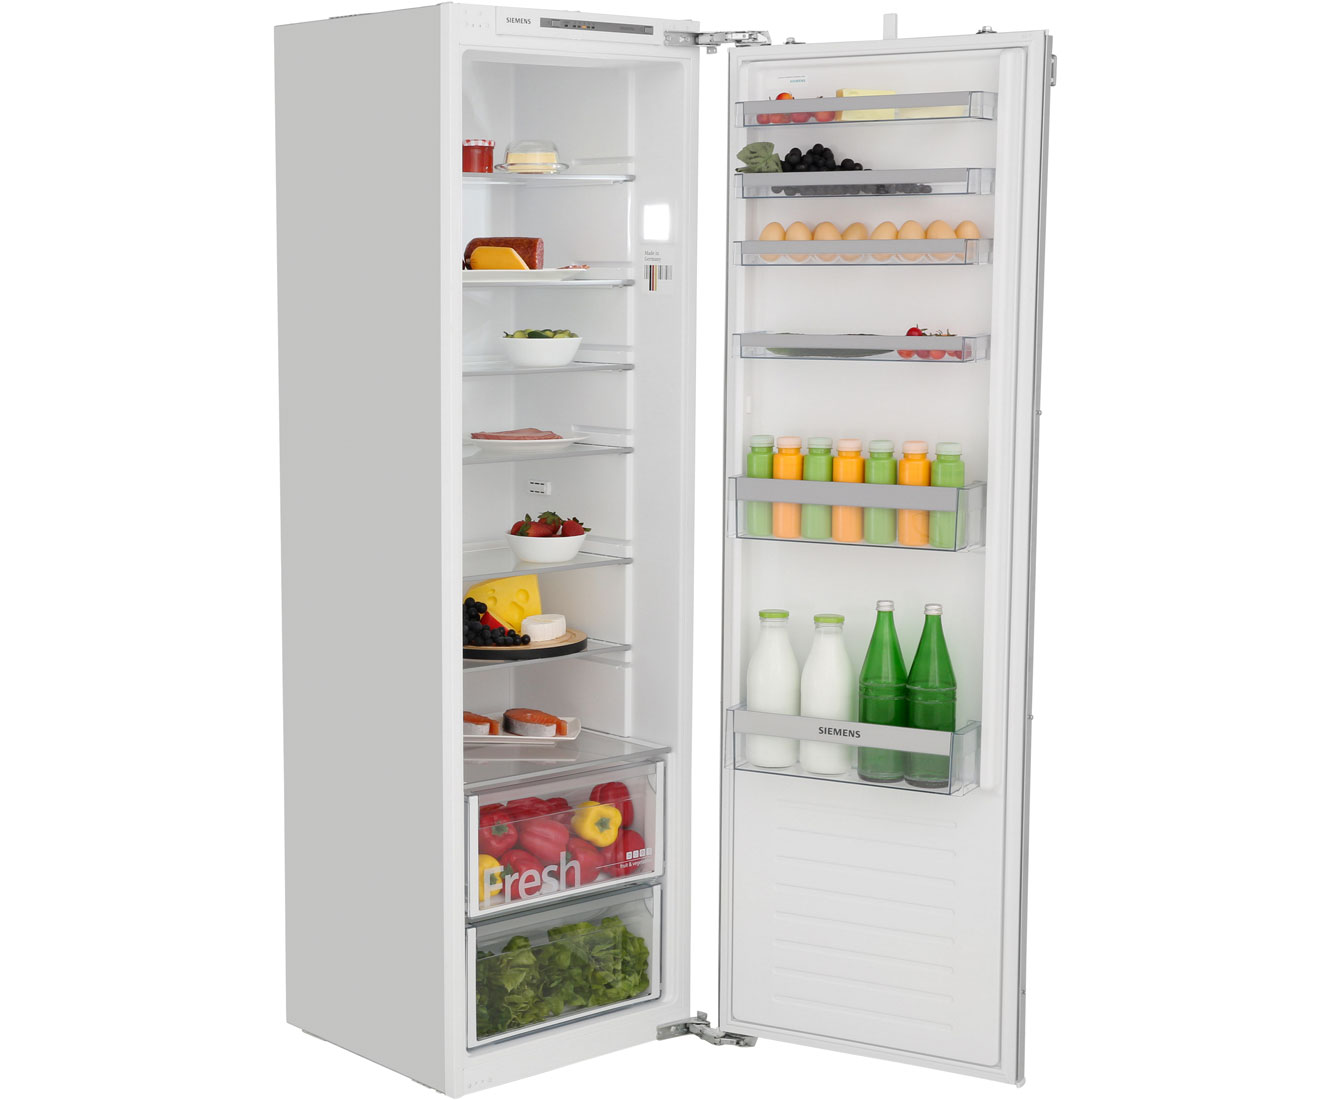 Siemens KI81RVF30 inbouw koelkast met Fresh lades online kopen